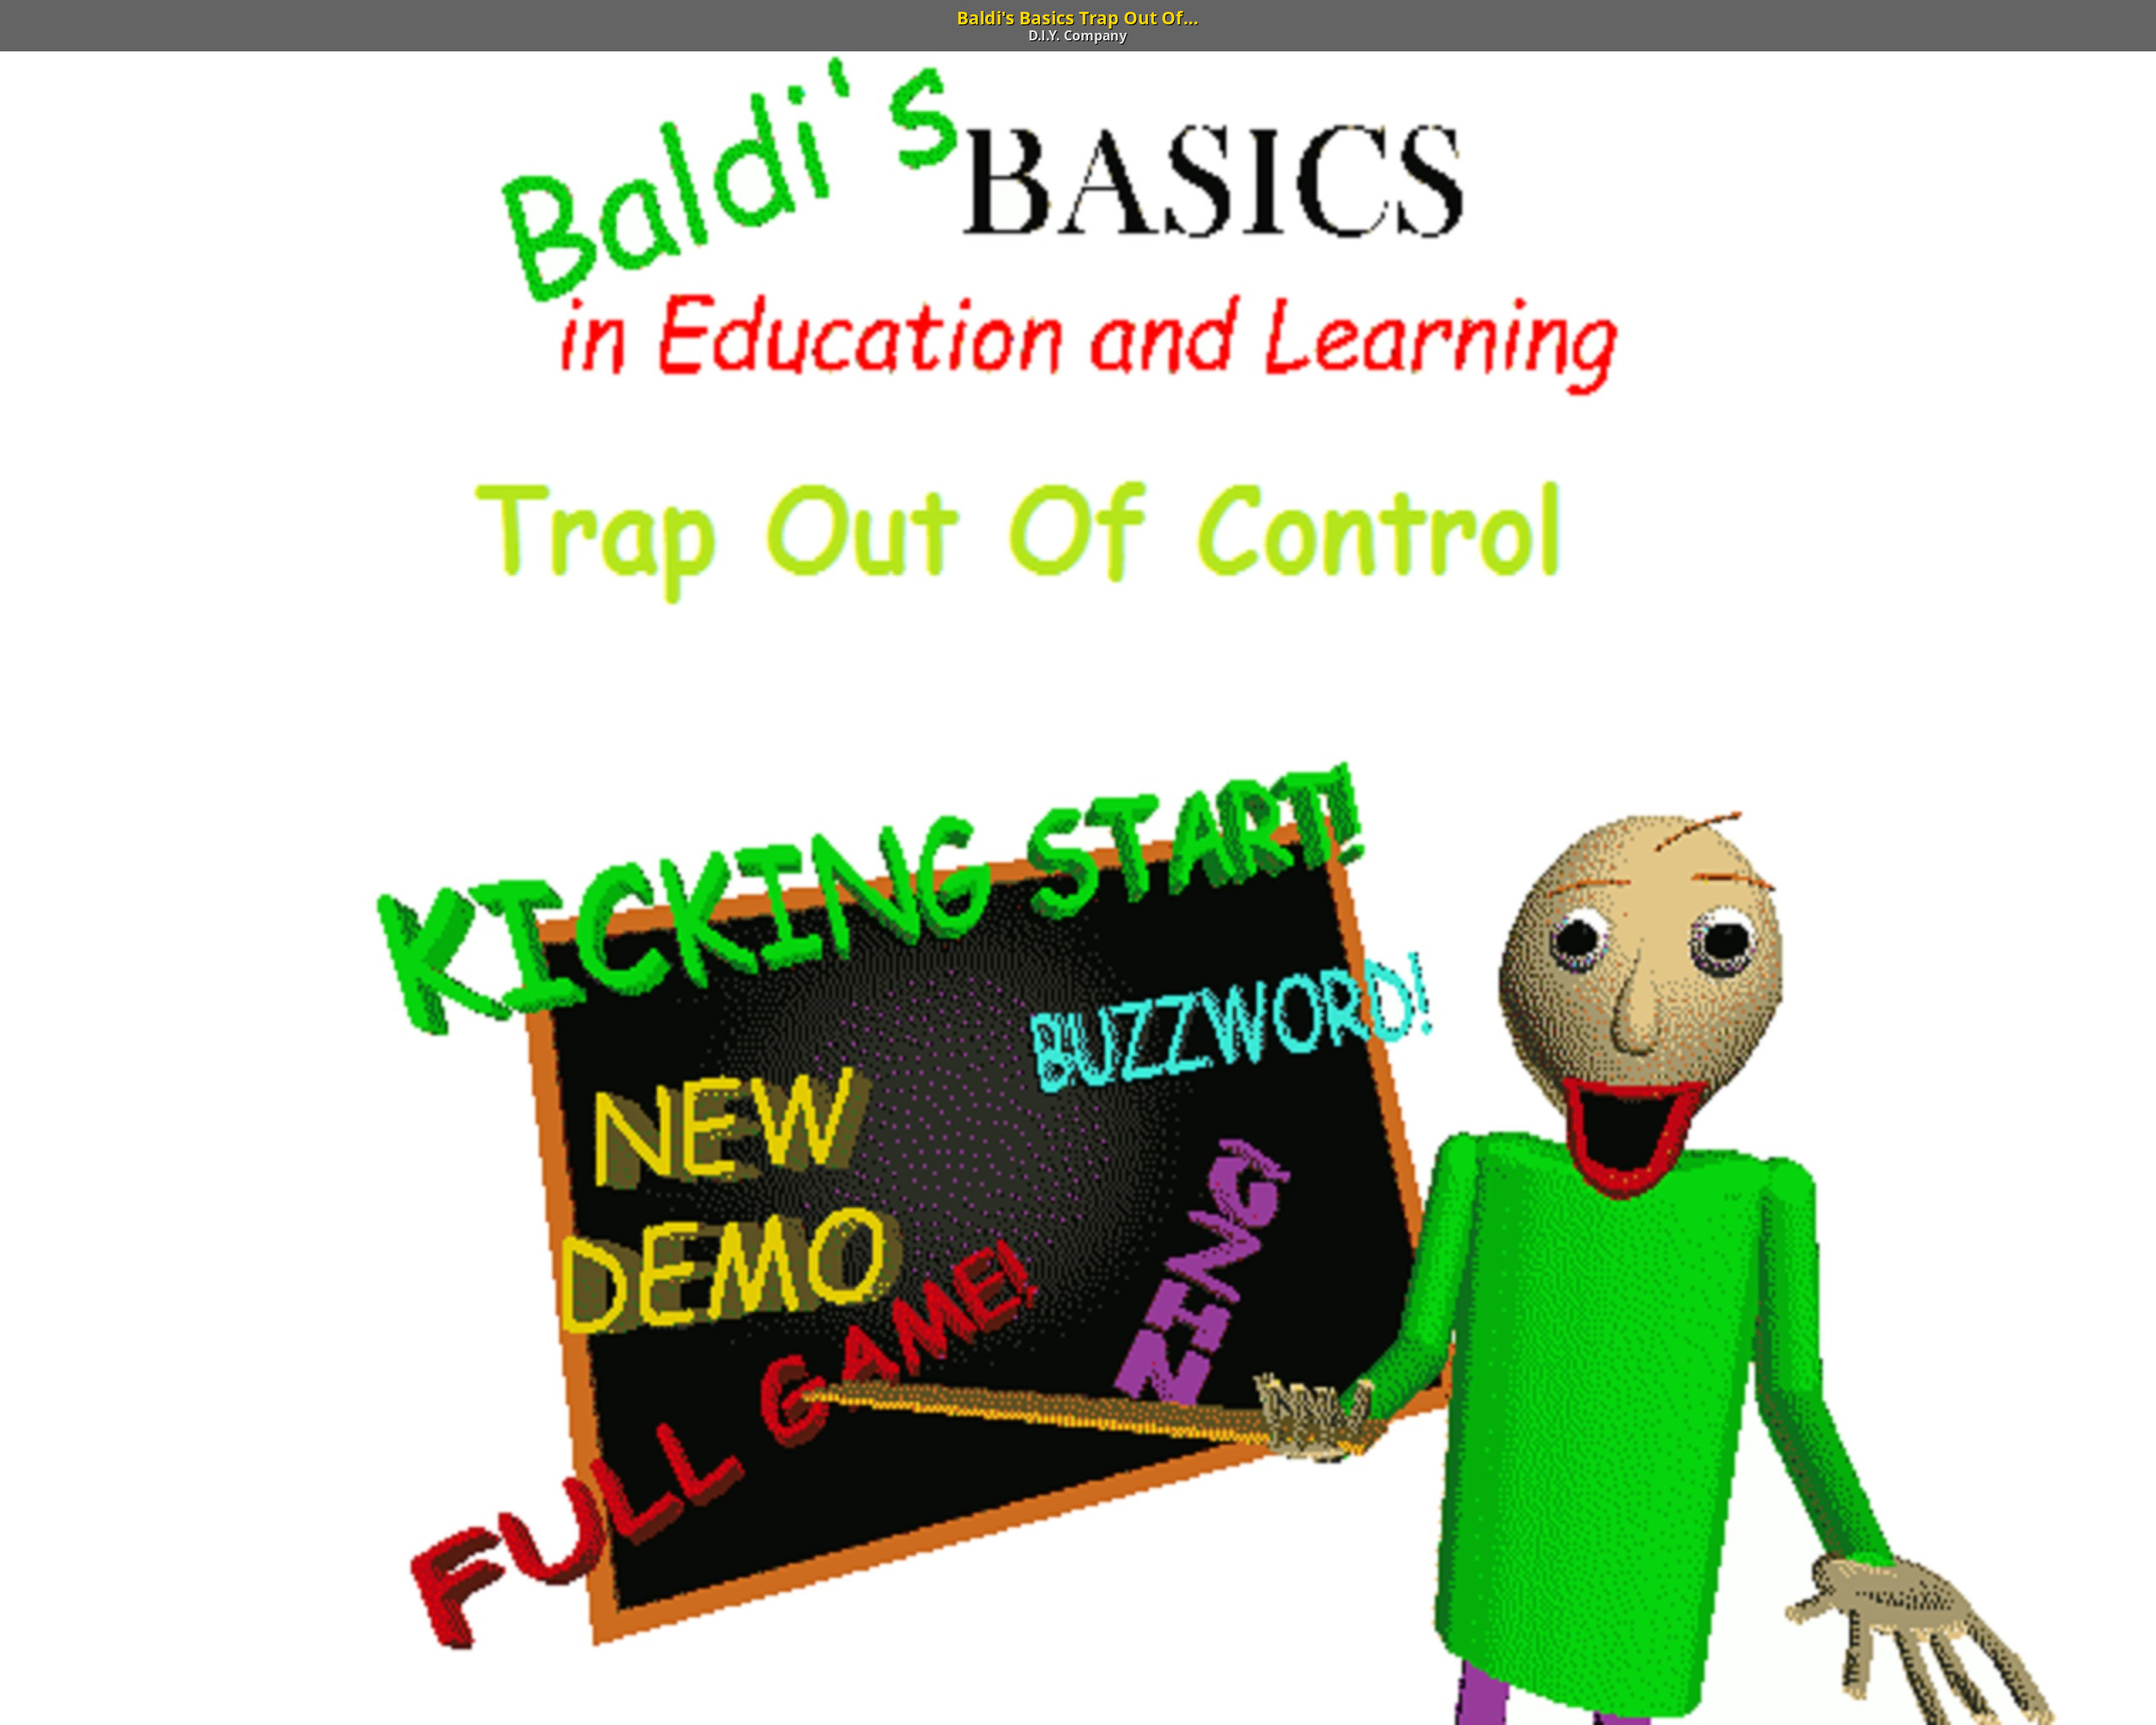 Baldis basics edition